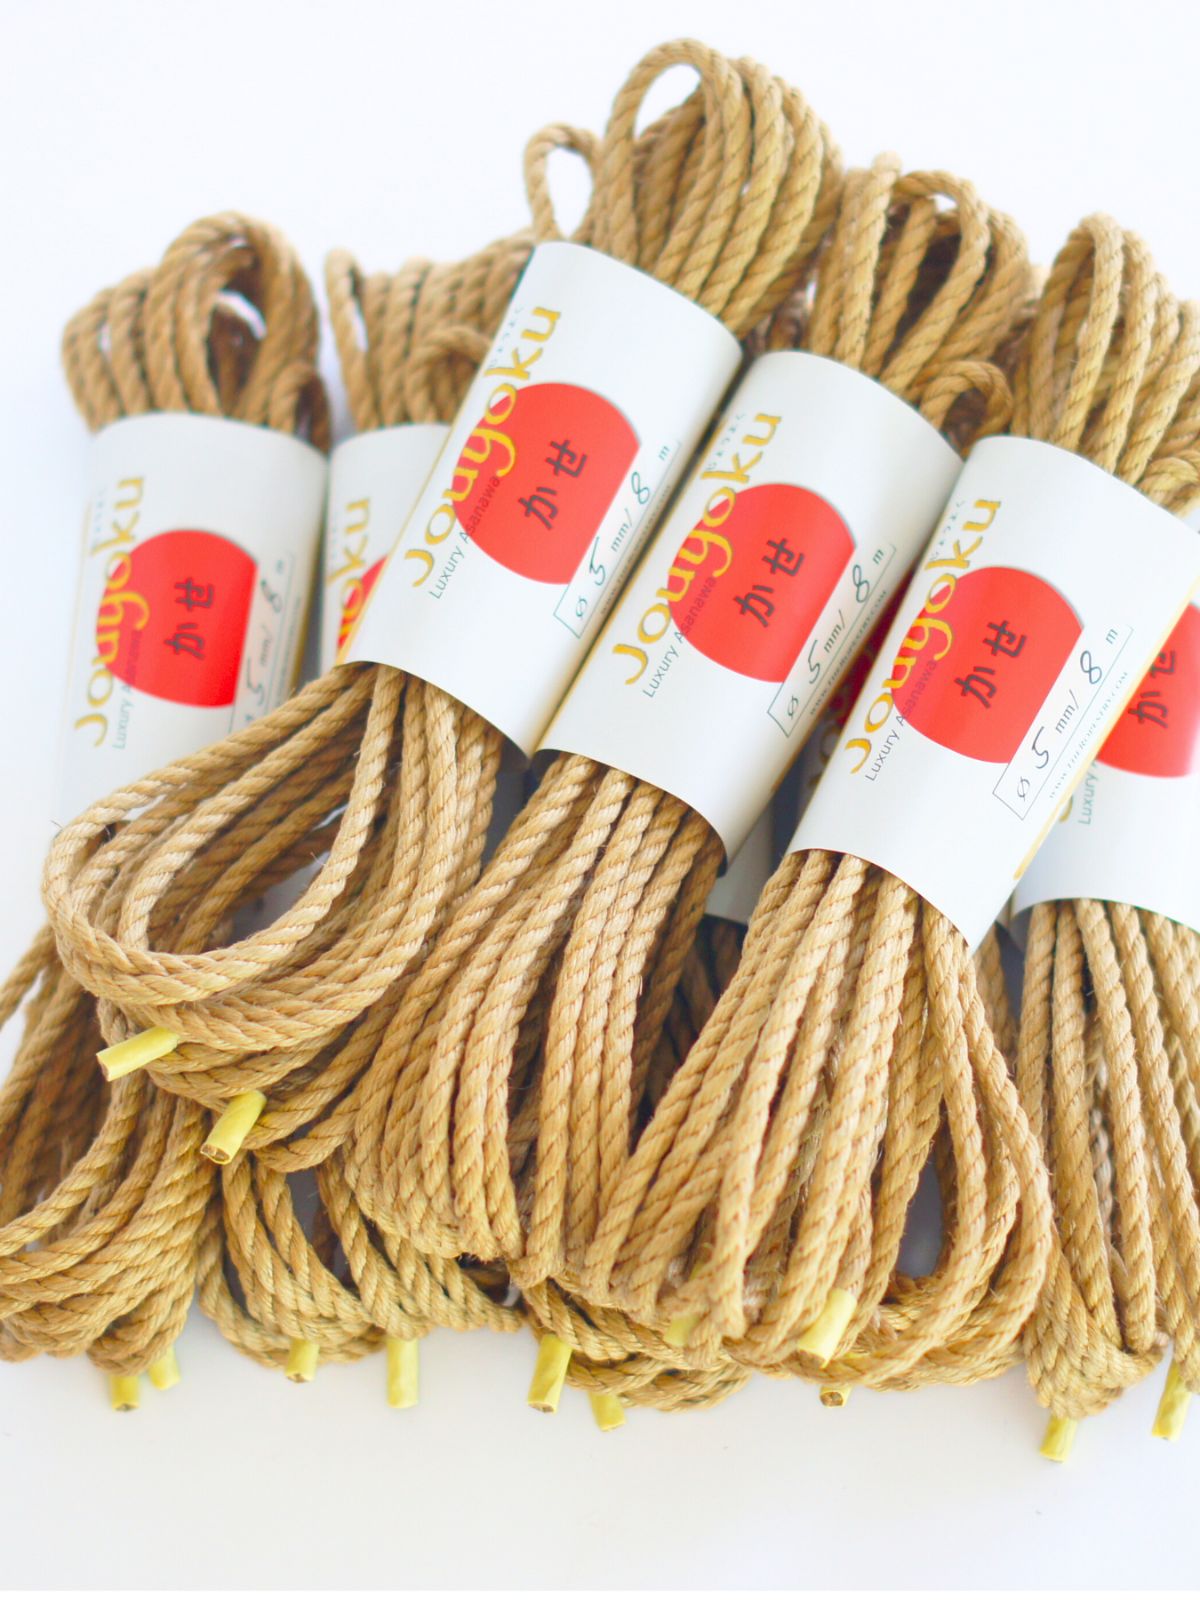 ø 5mm JOUYOKU ready-to-use jute rope for Shibari, Kinbaku bondage, various lengths and sets